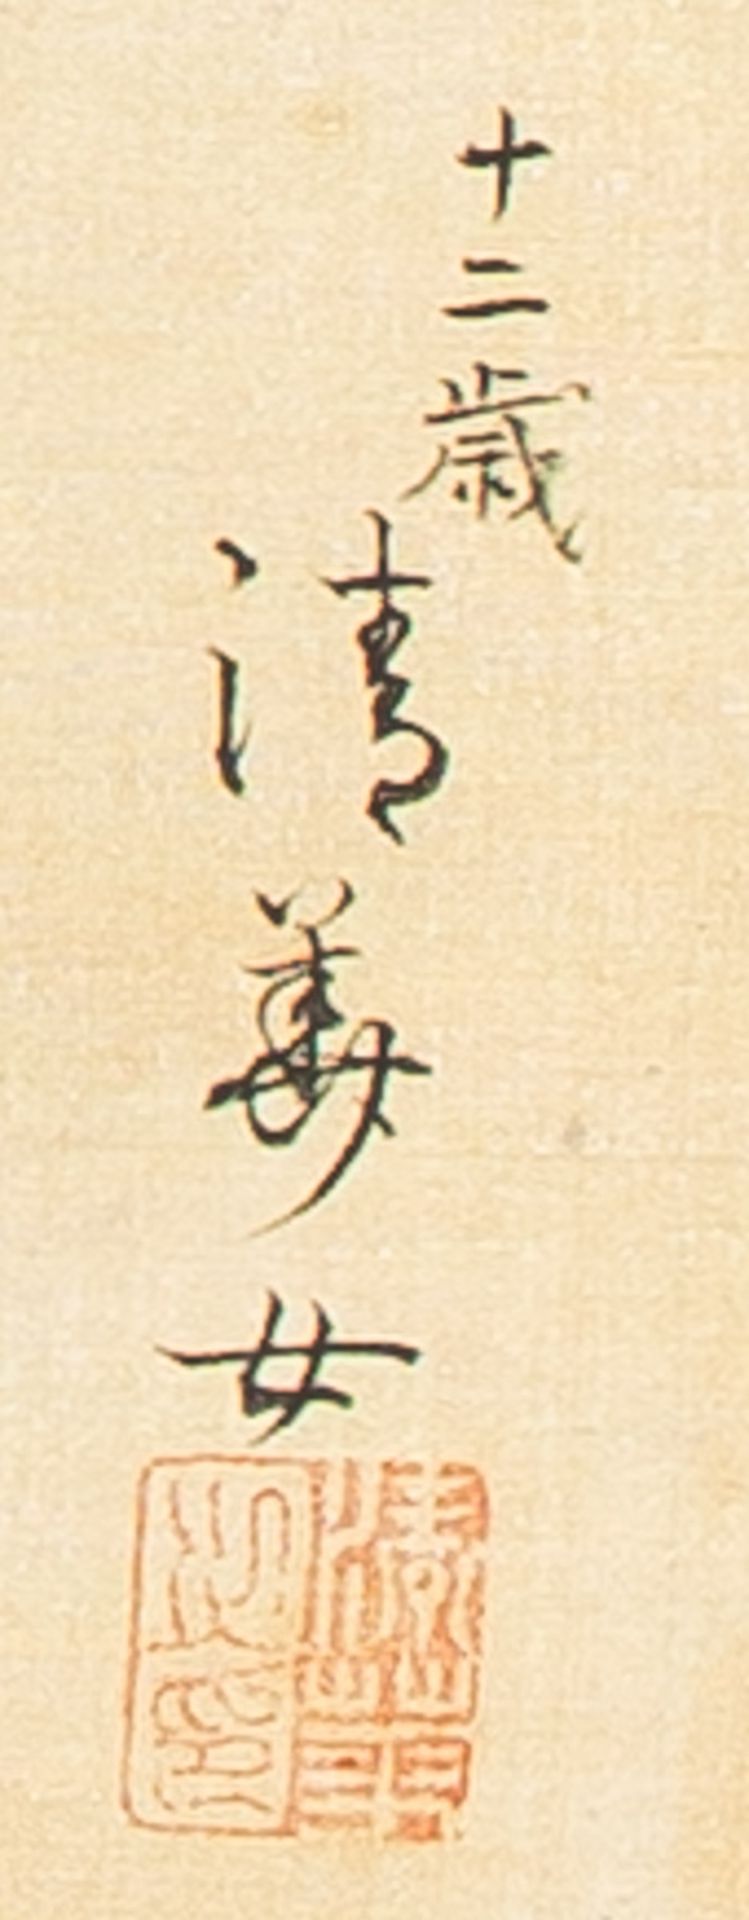 Rollbild (Japan, wohl 19. Jh.) - Image 3 of 3